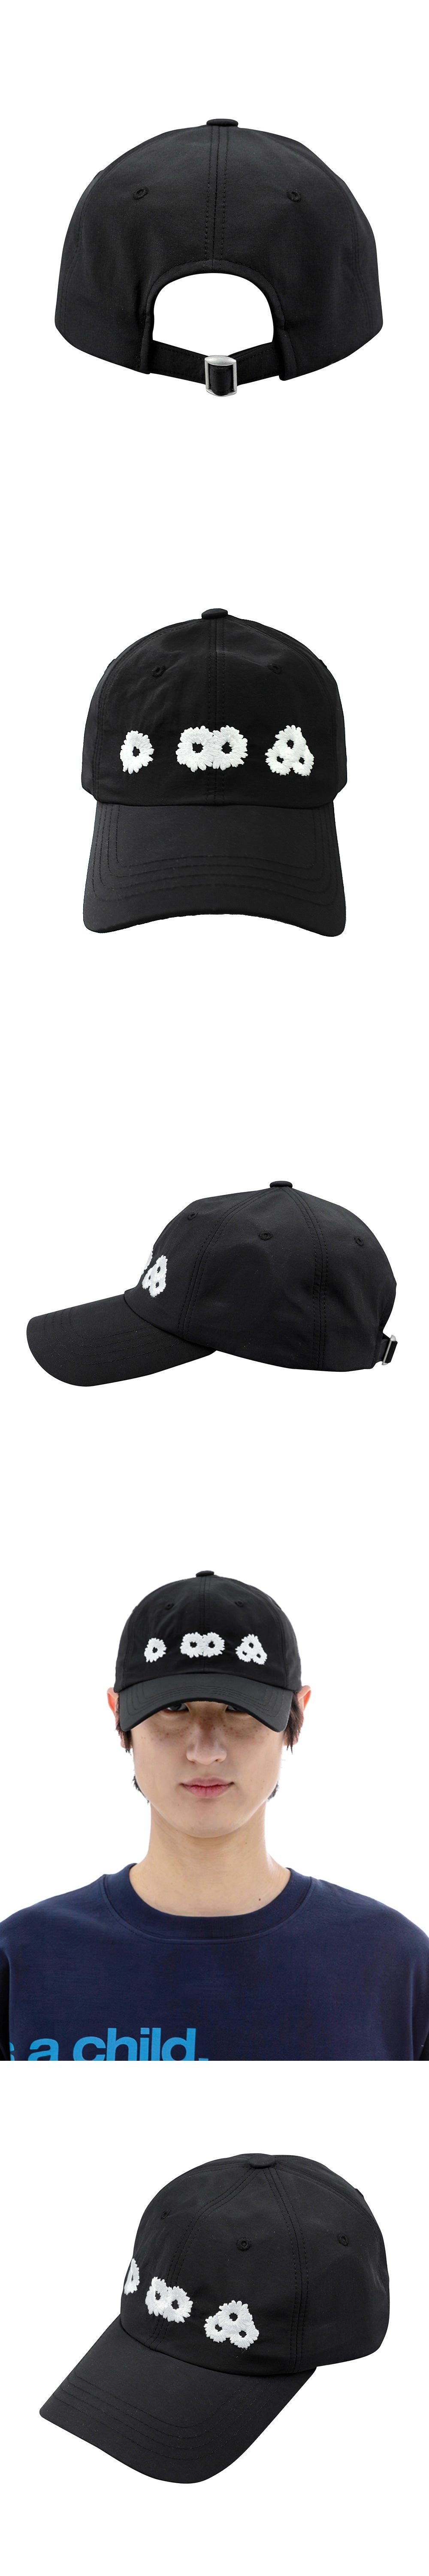 SIGNAL LOGO NYLON CAP in black